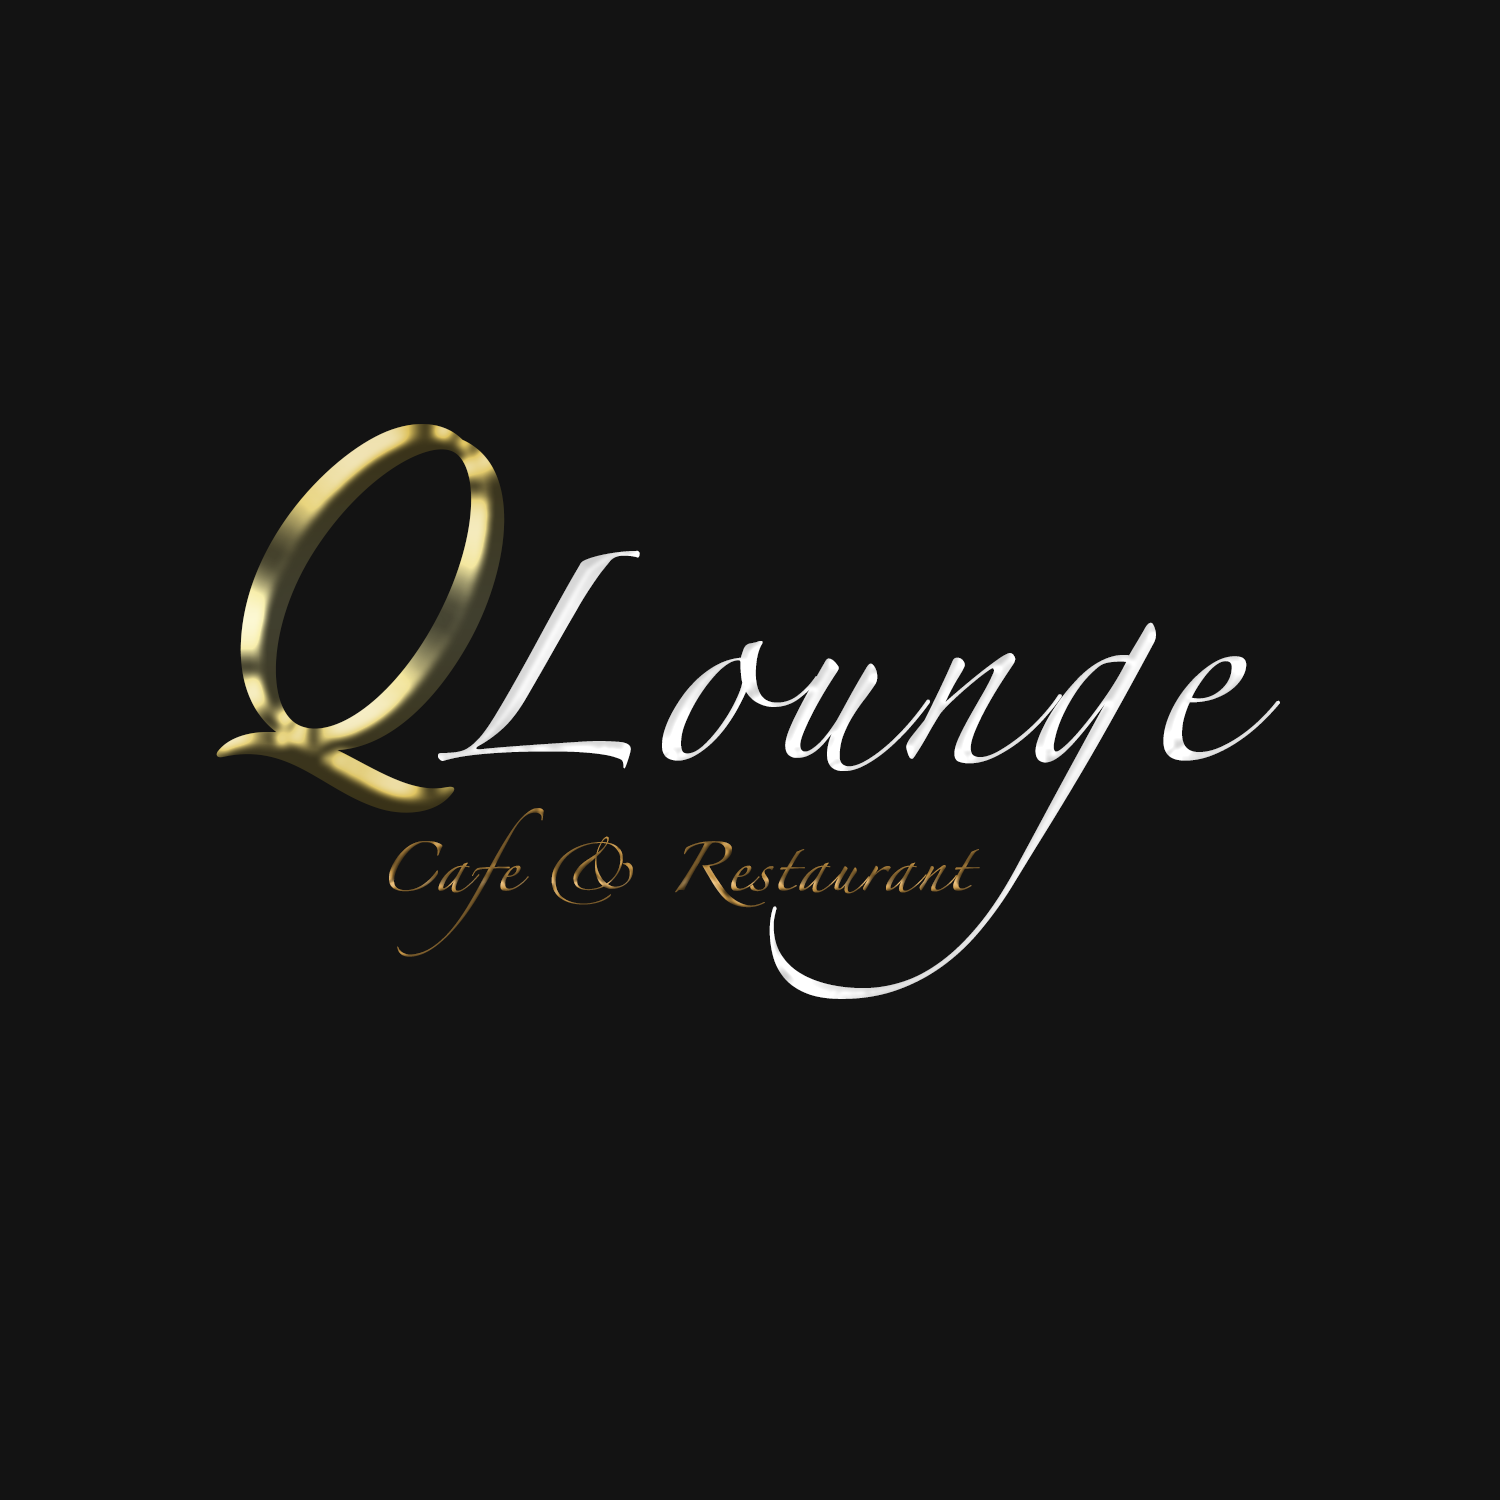 Q Lounge cafe & restaurant 